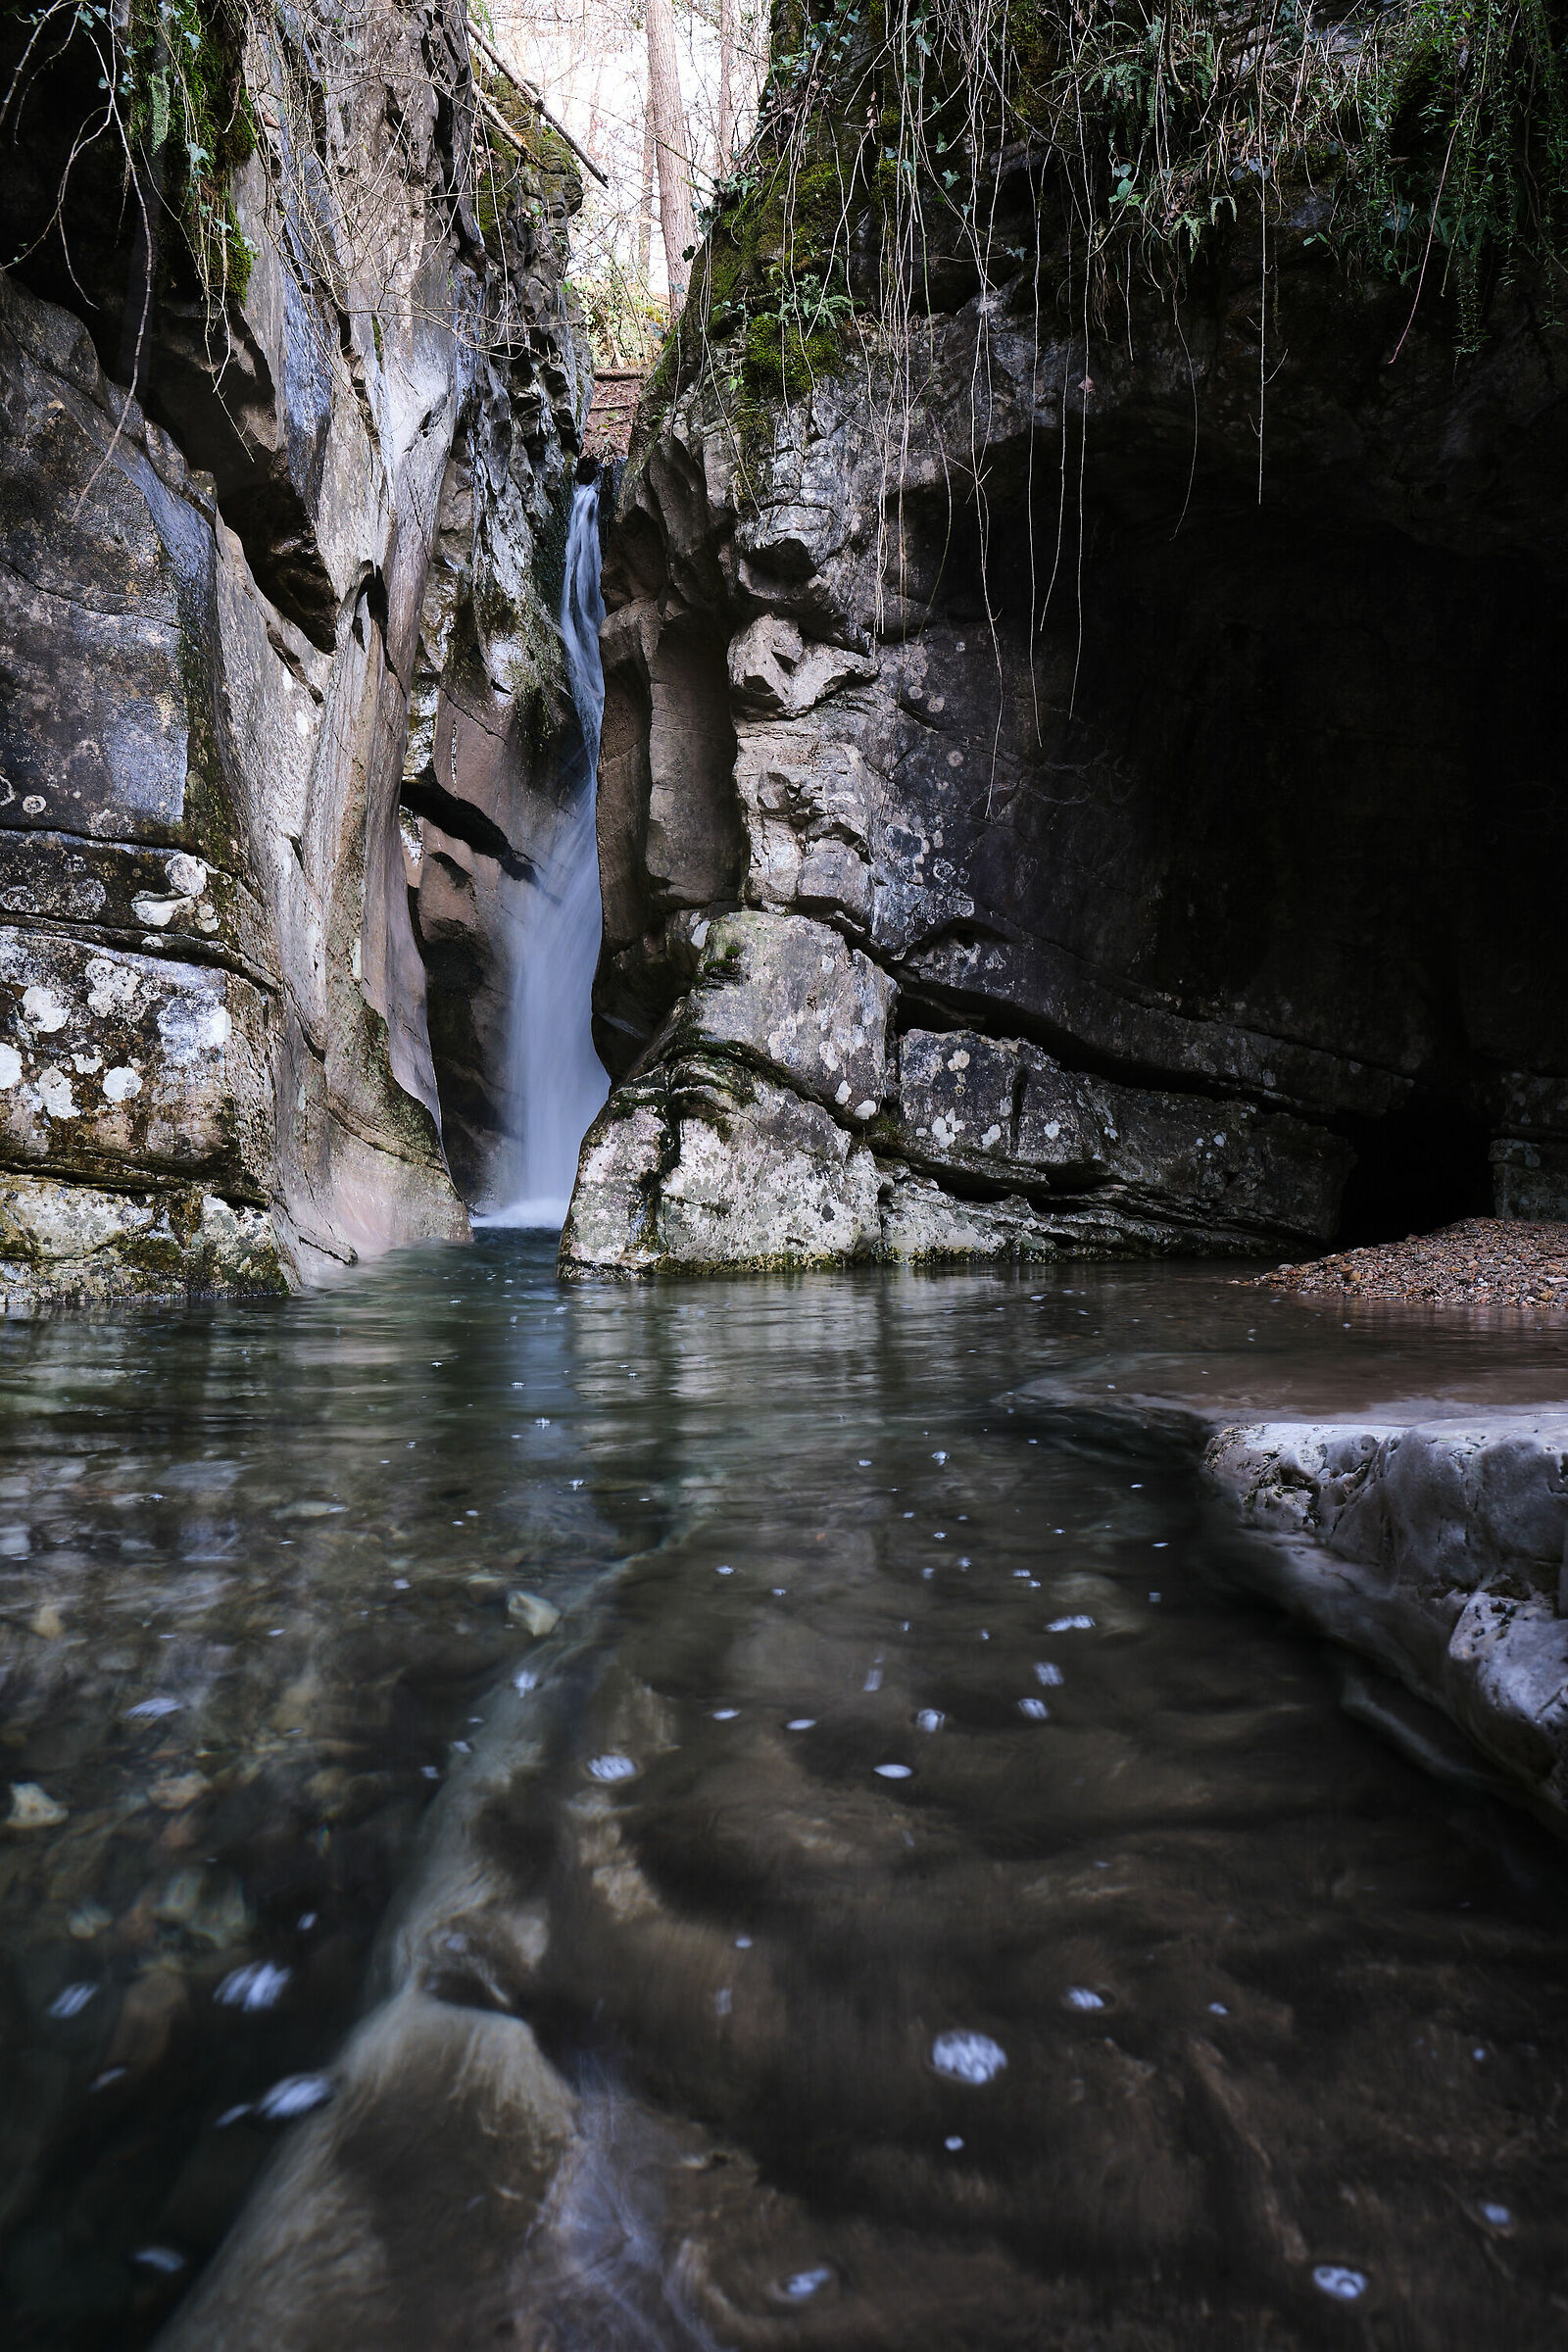 Grotte di Ara, a Grignasco (no)...